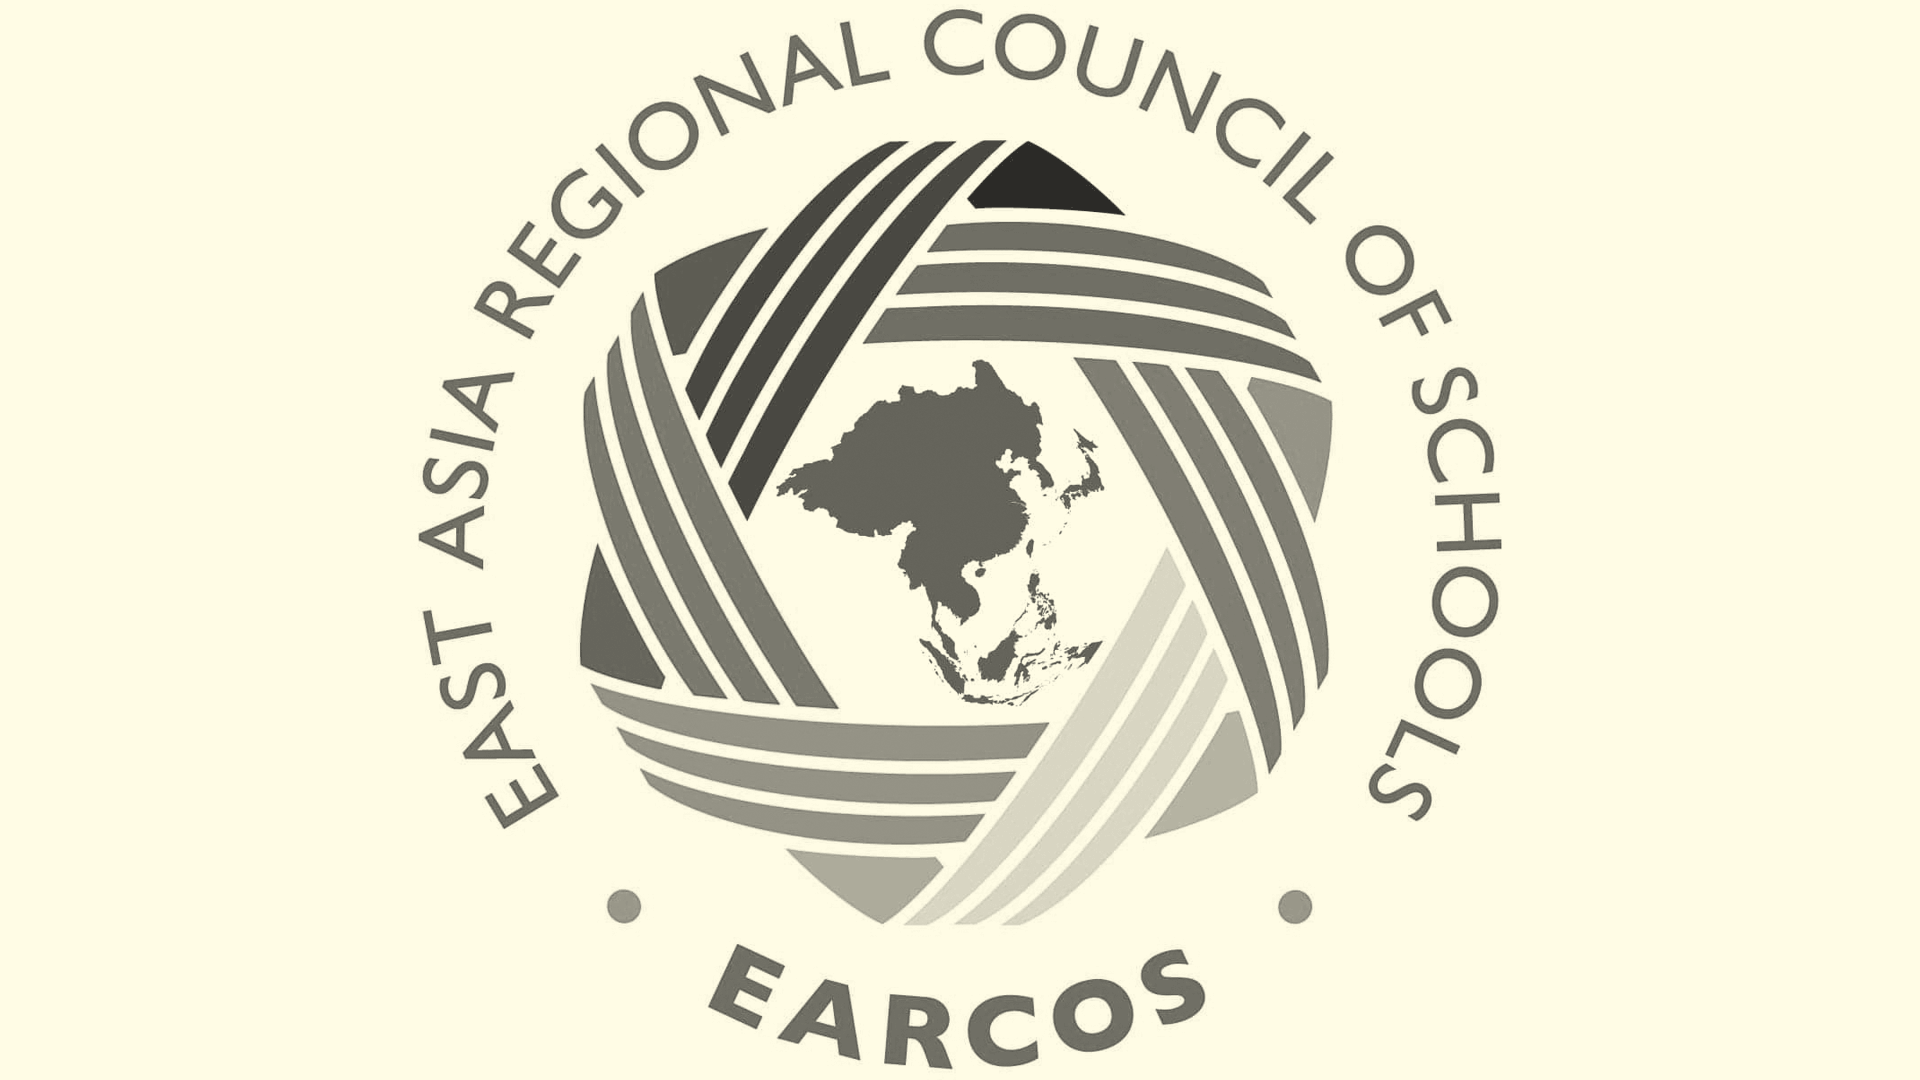 East Asia Regional Council of Schools logo